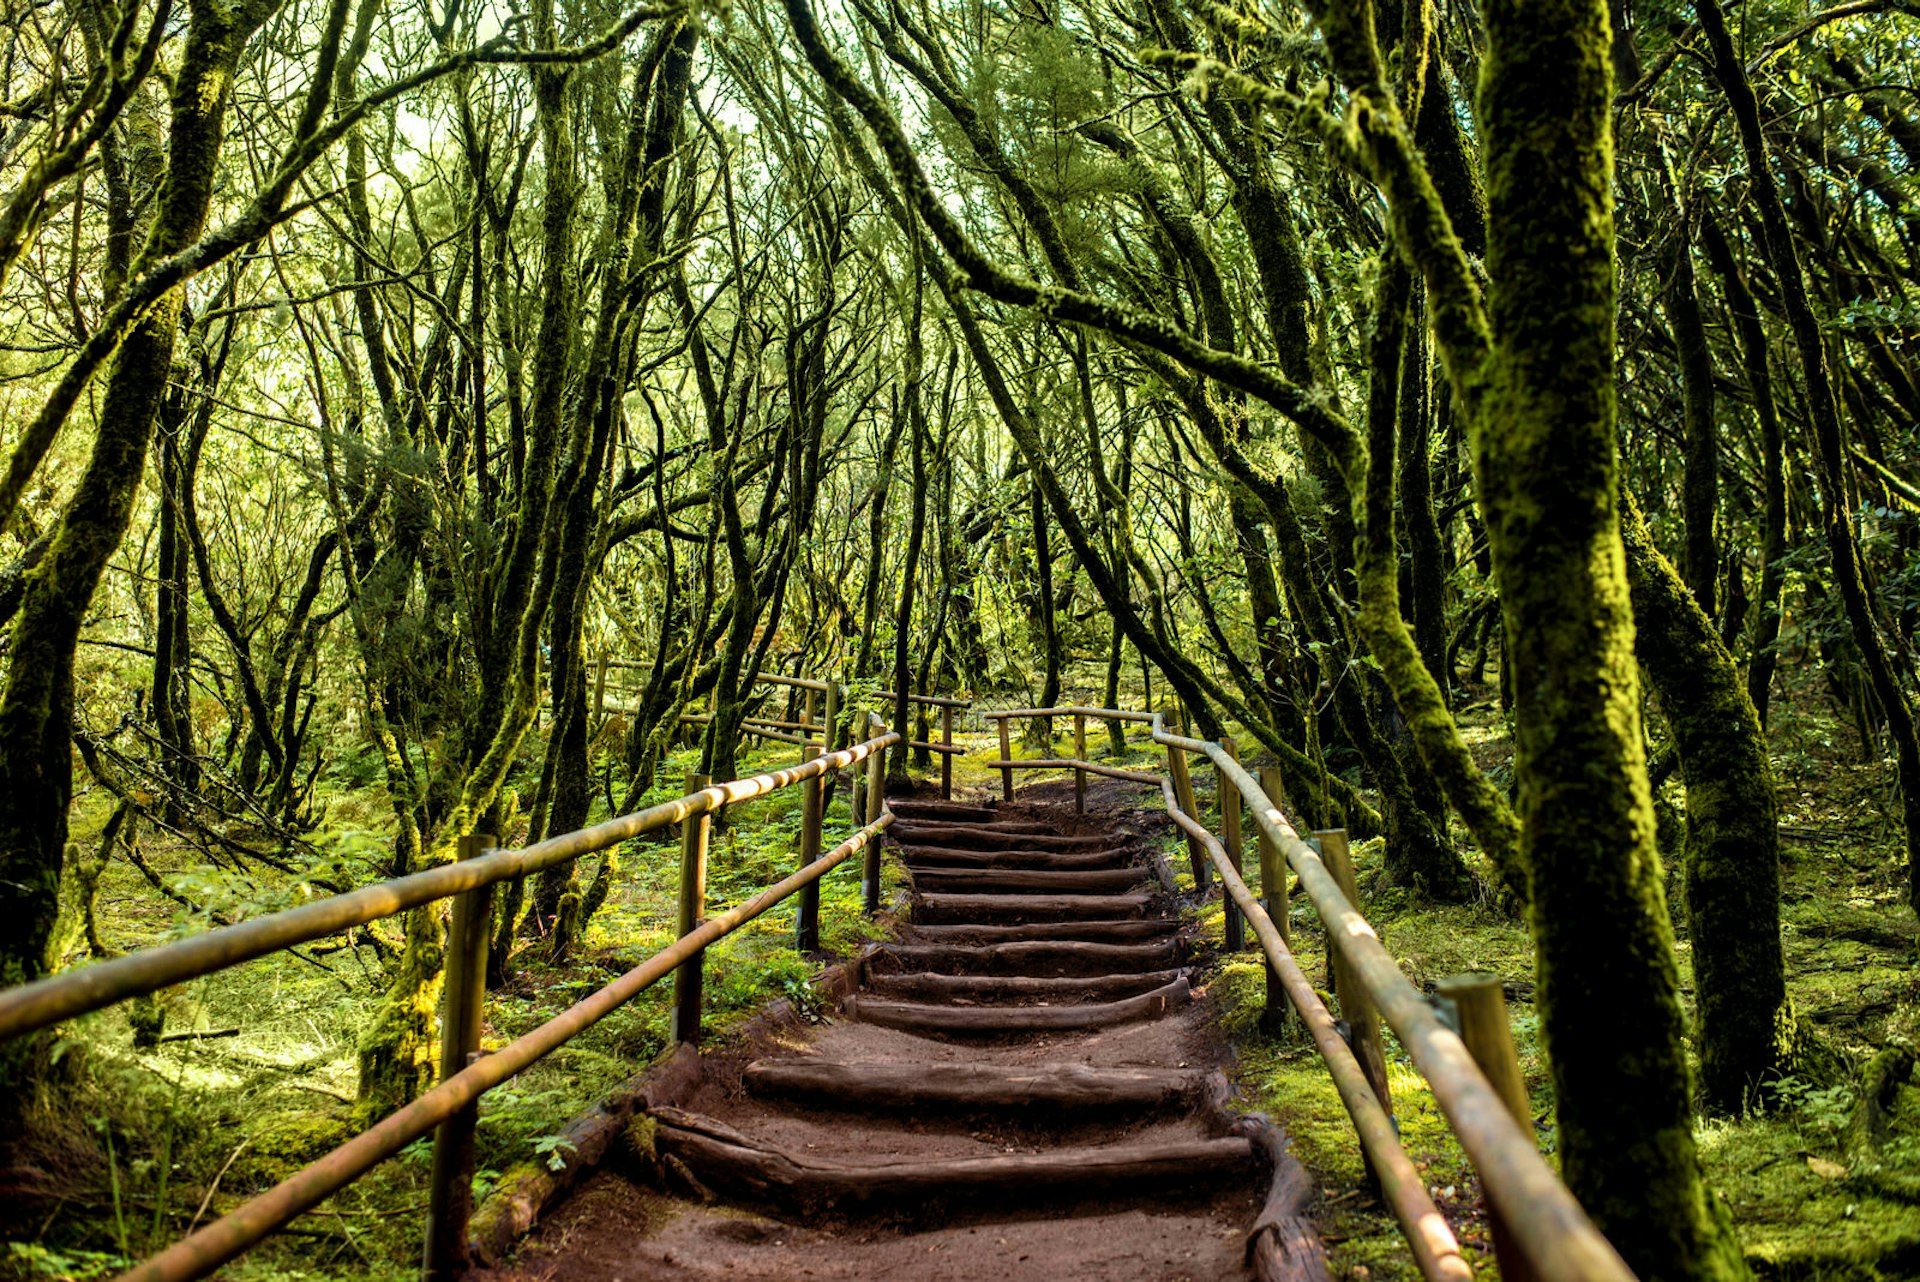 A footpath winds through the greenery of Parque Nacional de Garajonay © RossHelen / Shutterstock